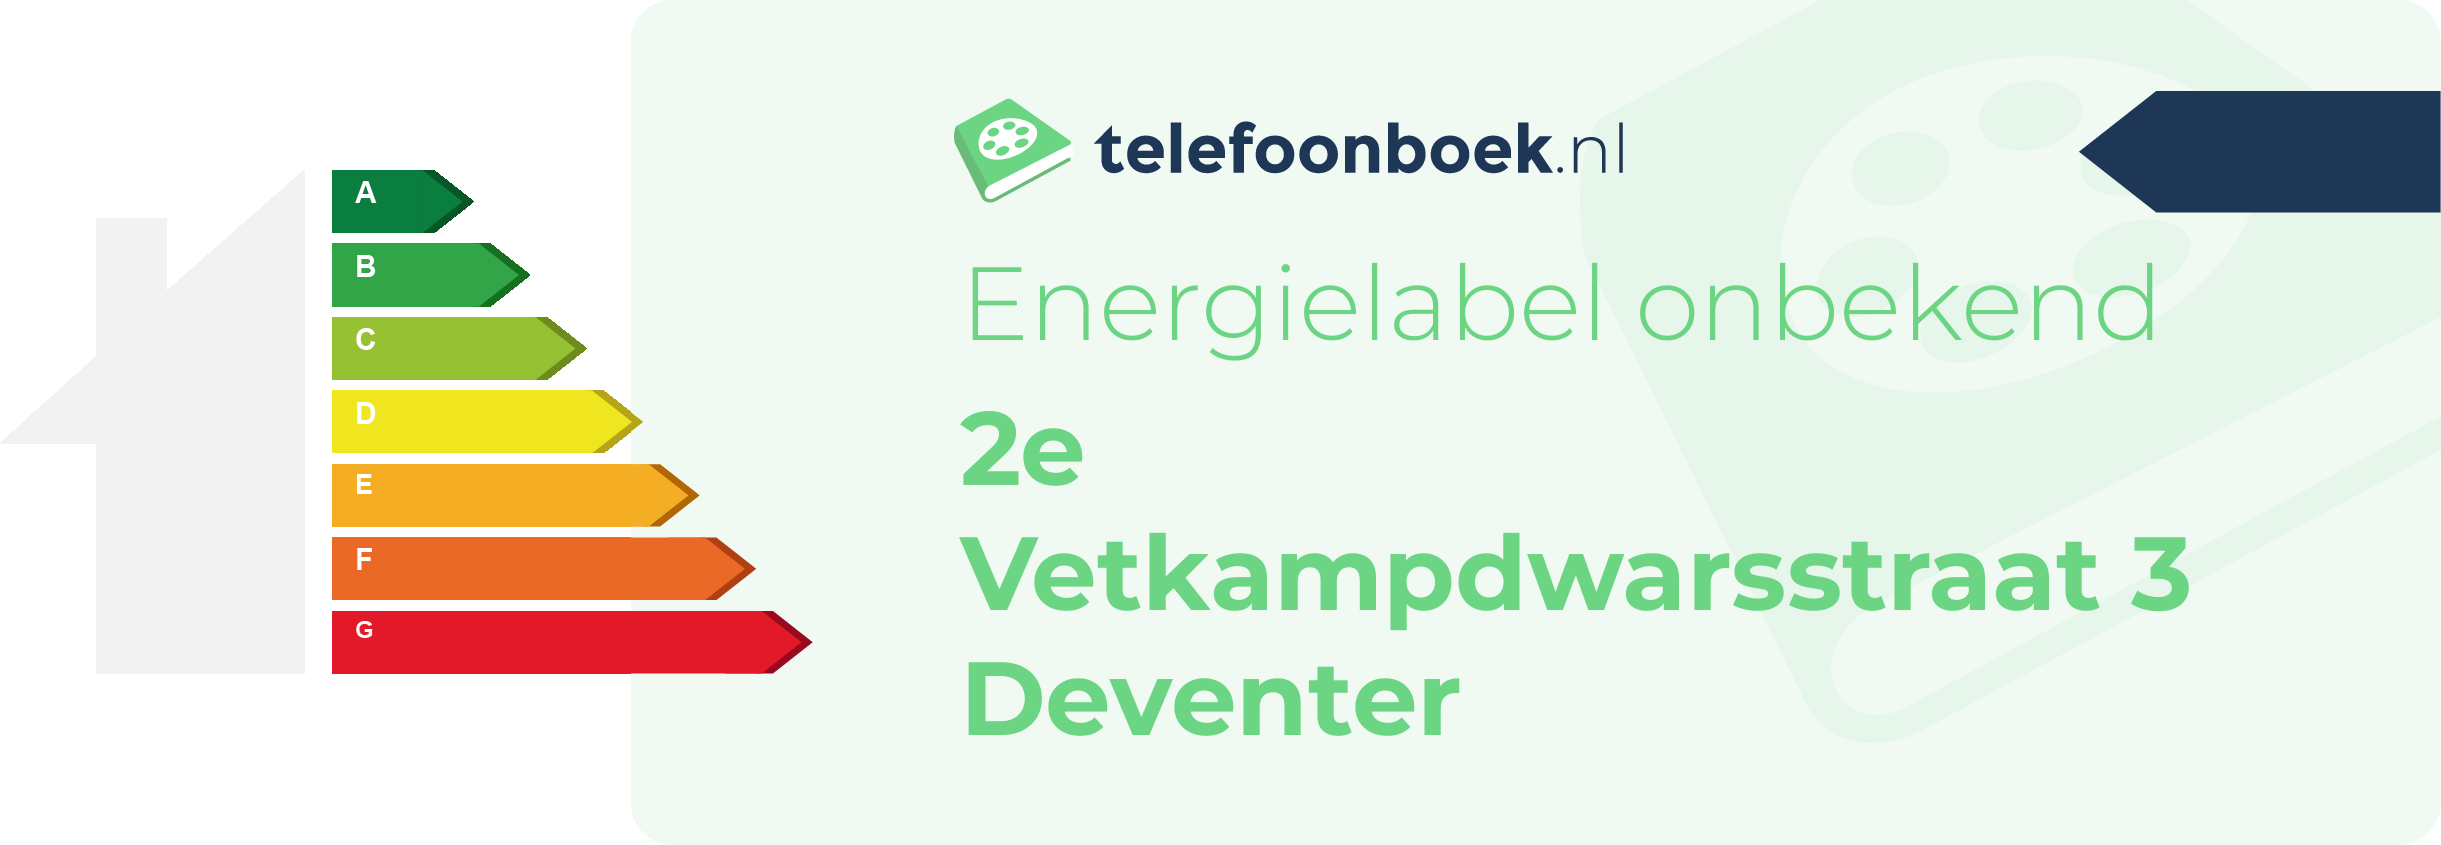 Energielabel 2e Vetkampdwarsstraat 3 Deventer